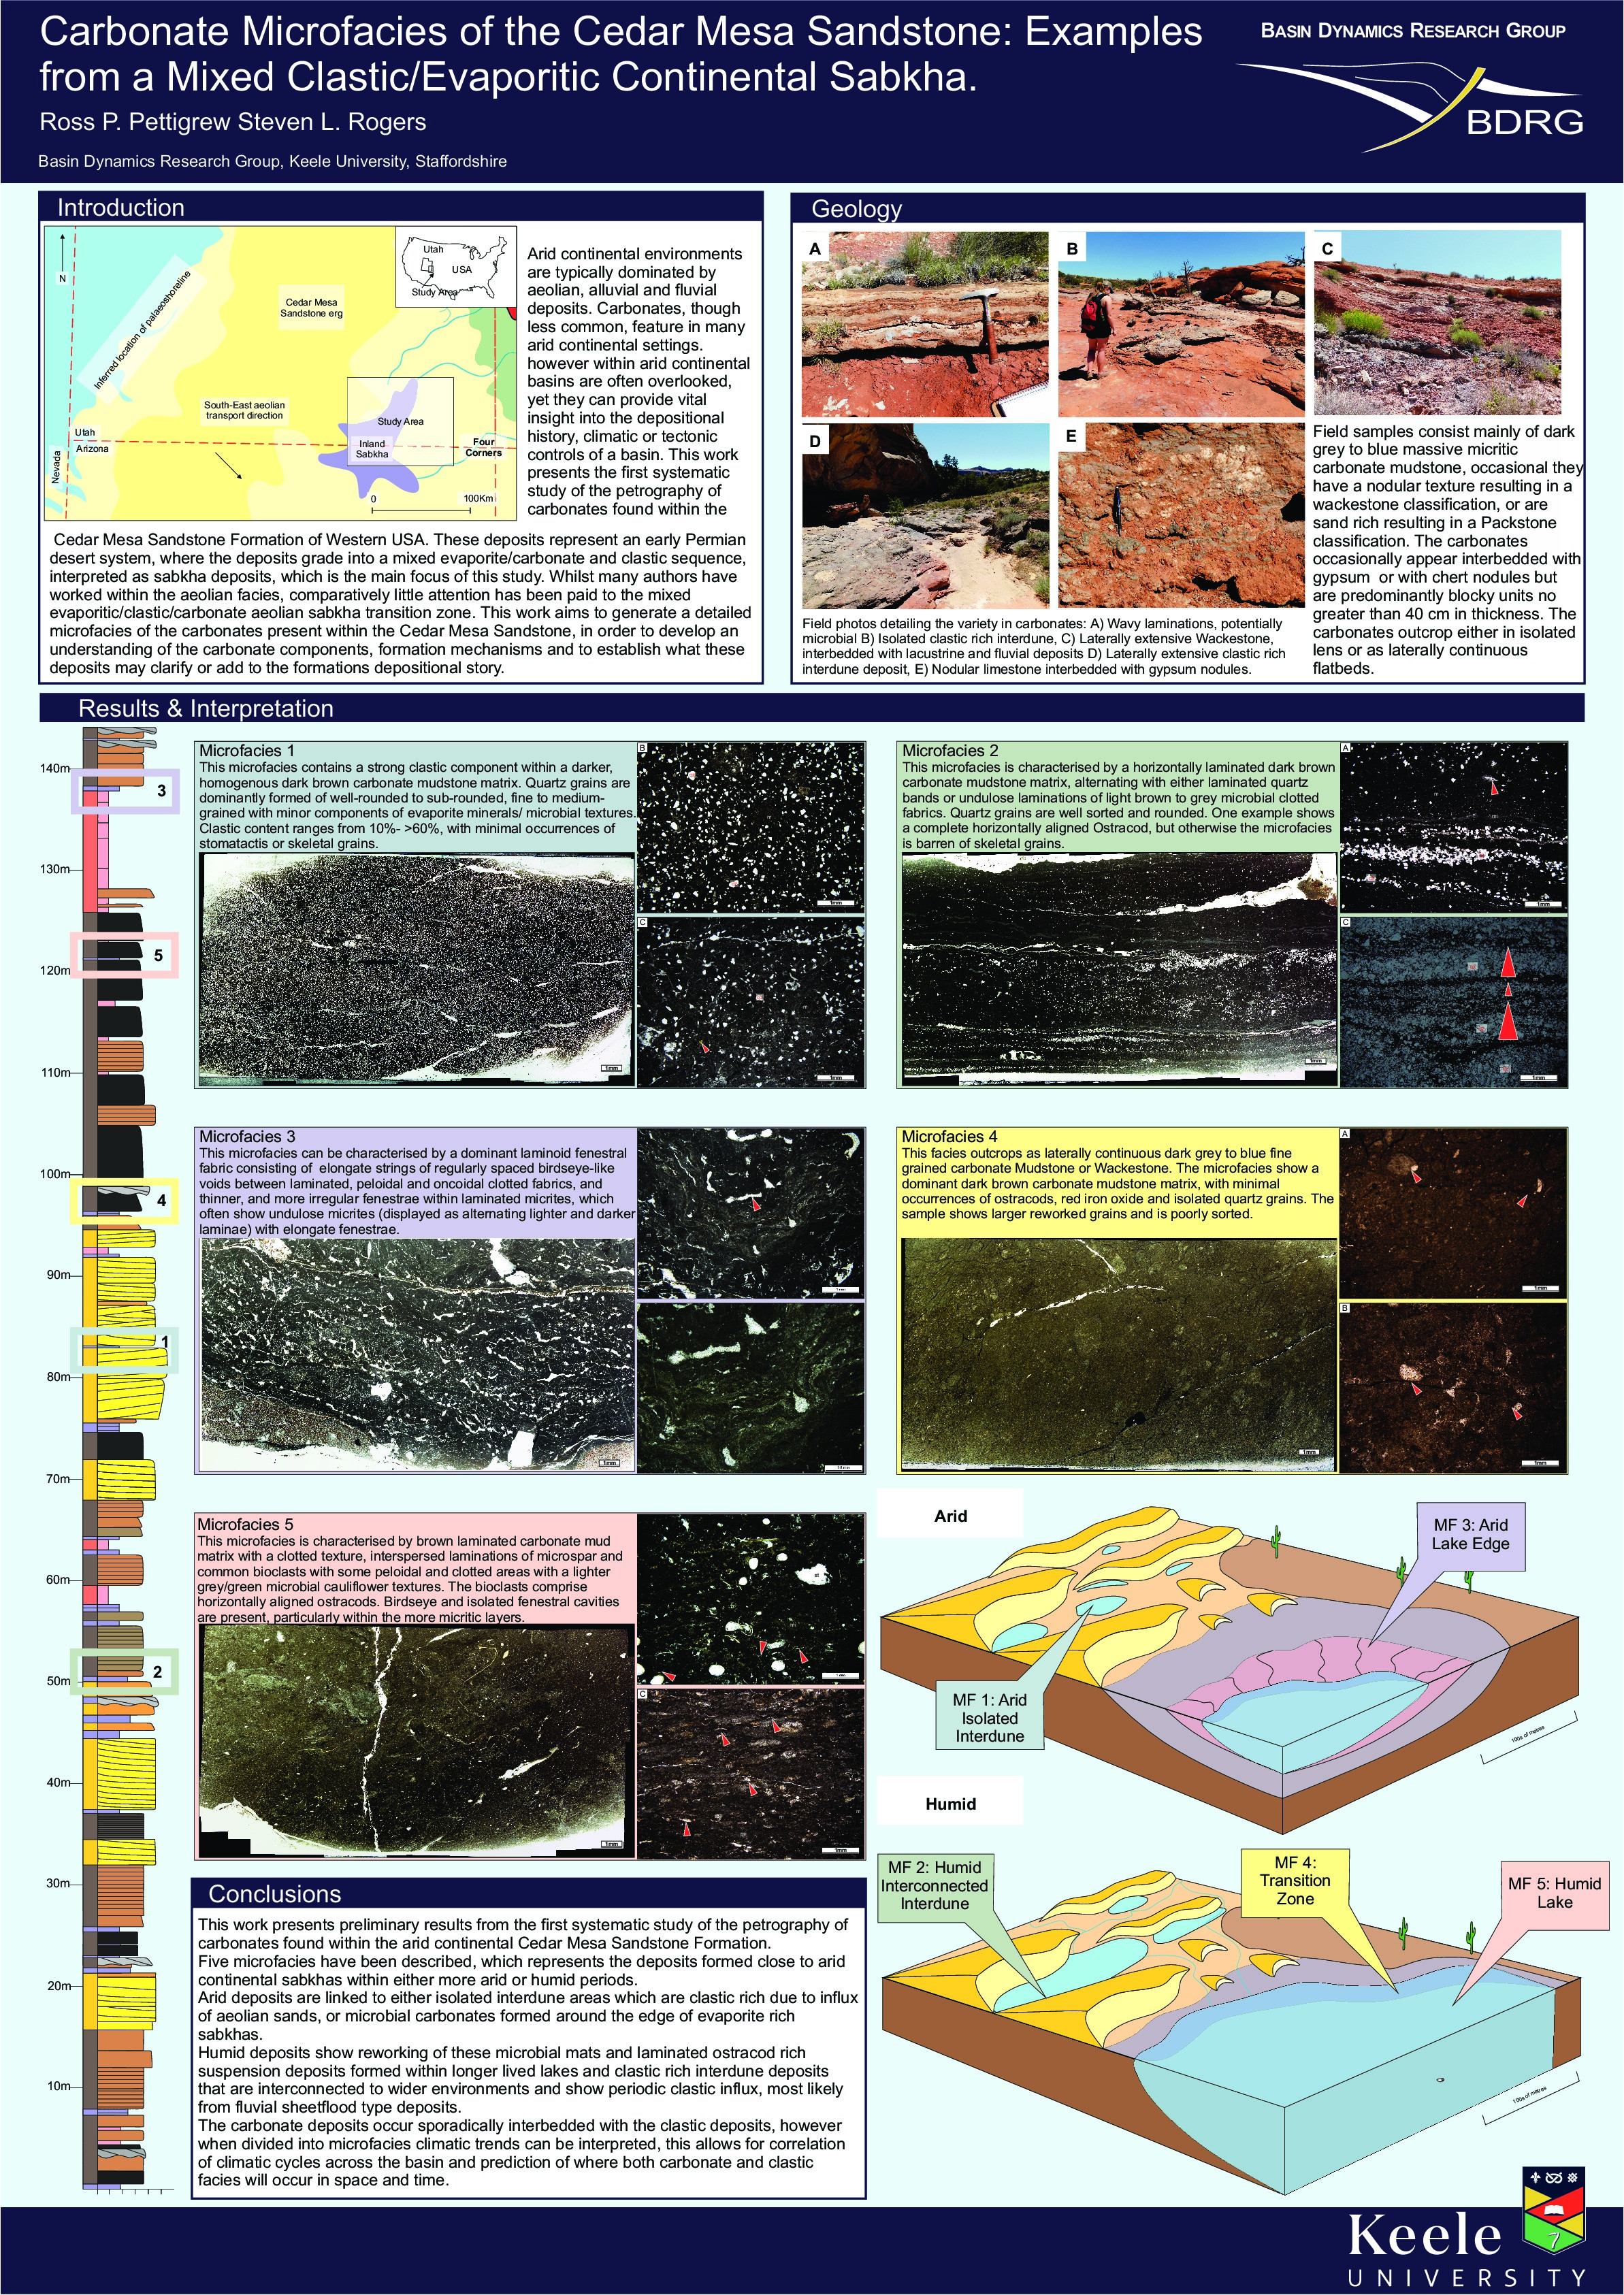 Carbonate Microfacies of the Cedar Mesa Sandstone: Examples from a Mixed Clastic/Evaporitic Continental Sabkha Thumbnail